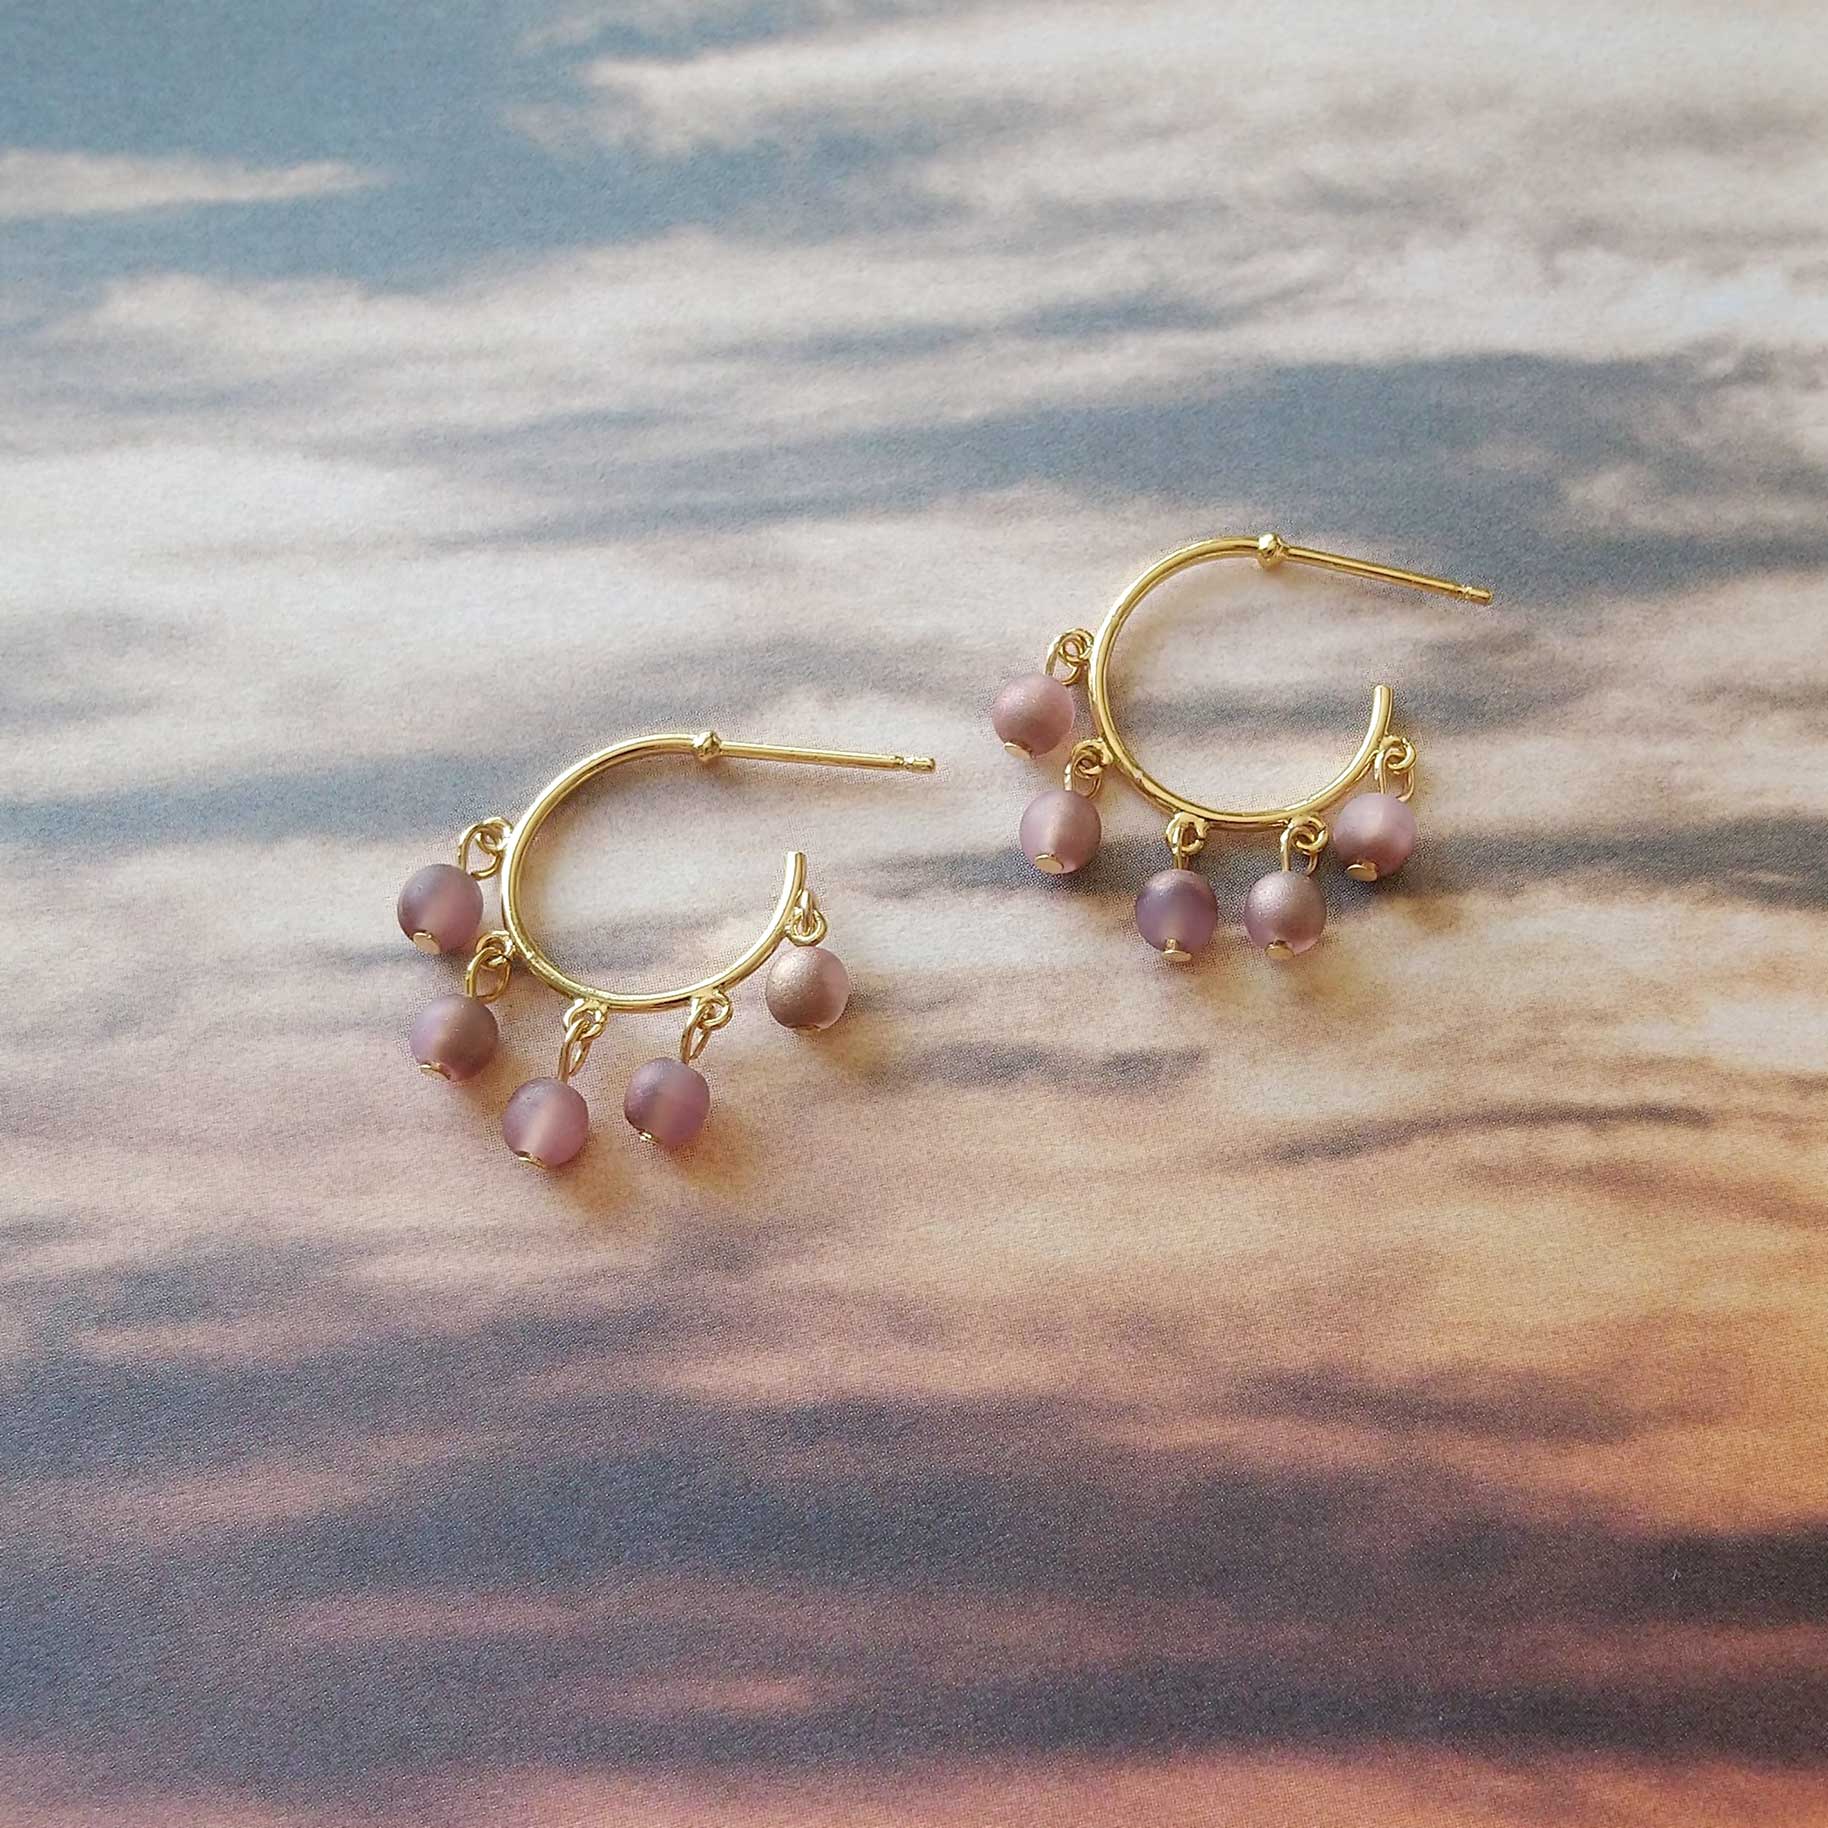 gold hoop earrings with beads